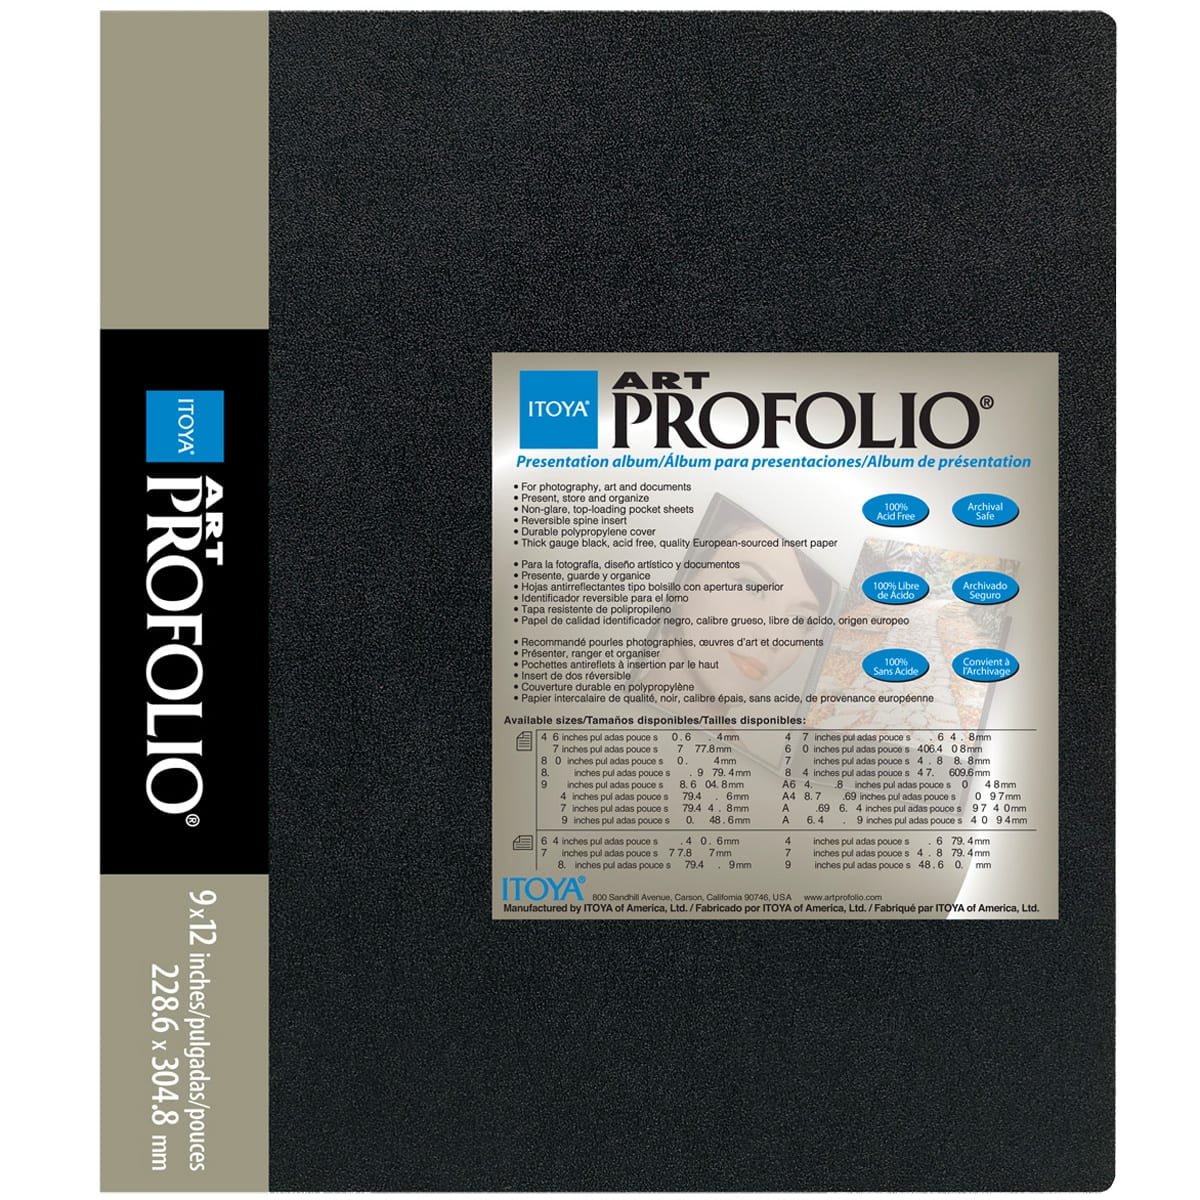 Itoya® Art Profolio® The Original Digital Printer Album